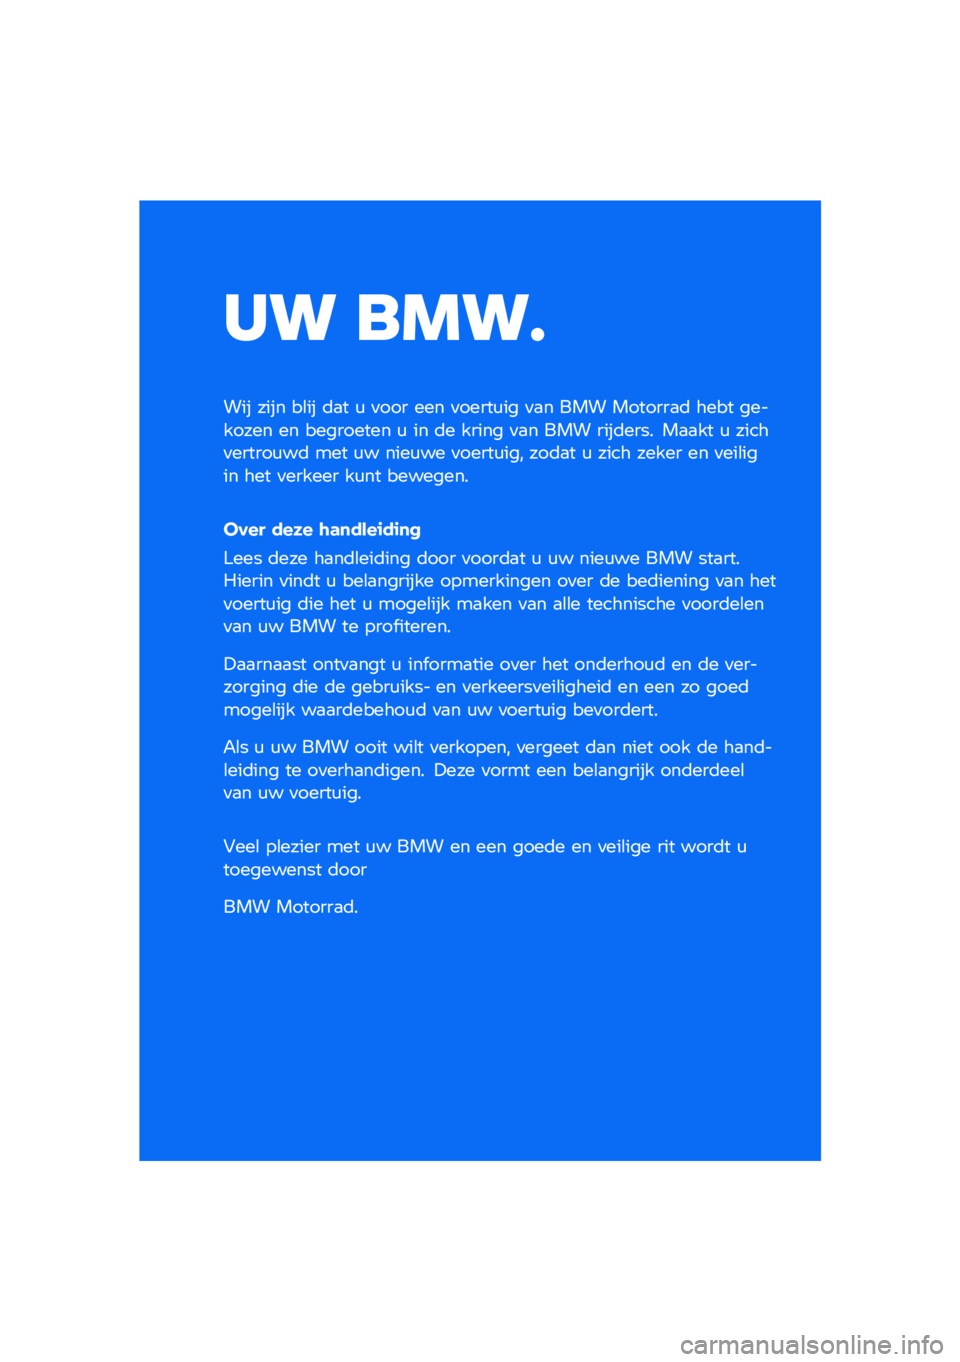 BMW MOTORRAD R NINE T URVAN G/S 2020  Handleiding (in Dutch) �� ����
��� ���� ��\b�� �	�
� �\f �
��� ��� �
�����\f�� �
�
� ��� �������
�	 ���� �������� �� ��������� �\f �� �	� ����� �
�
� �